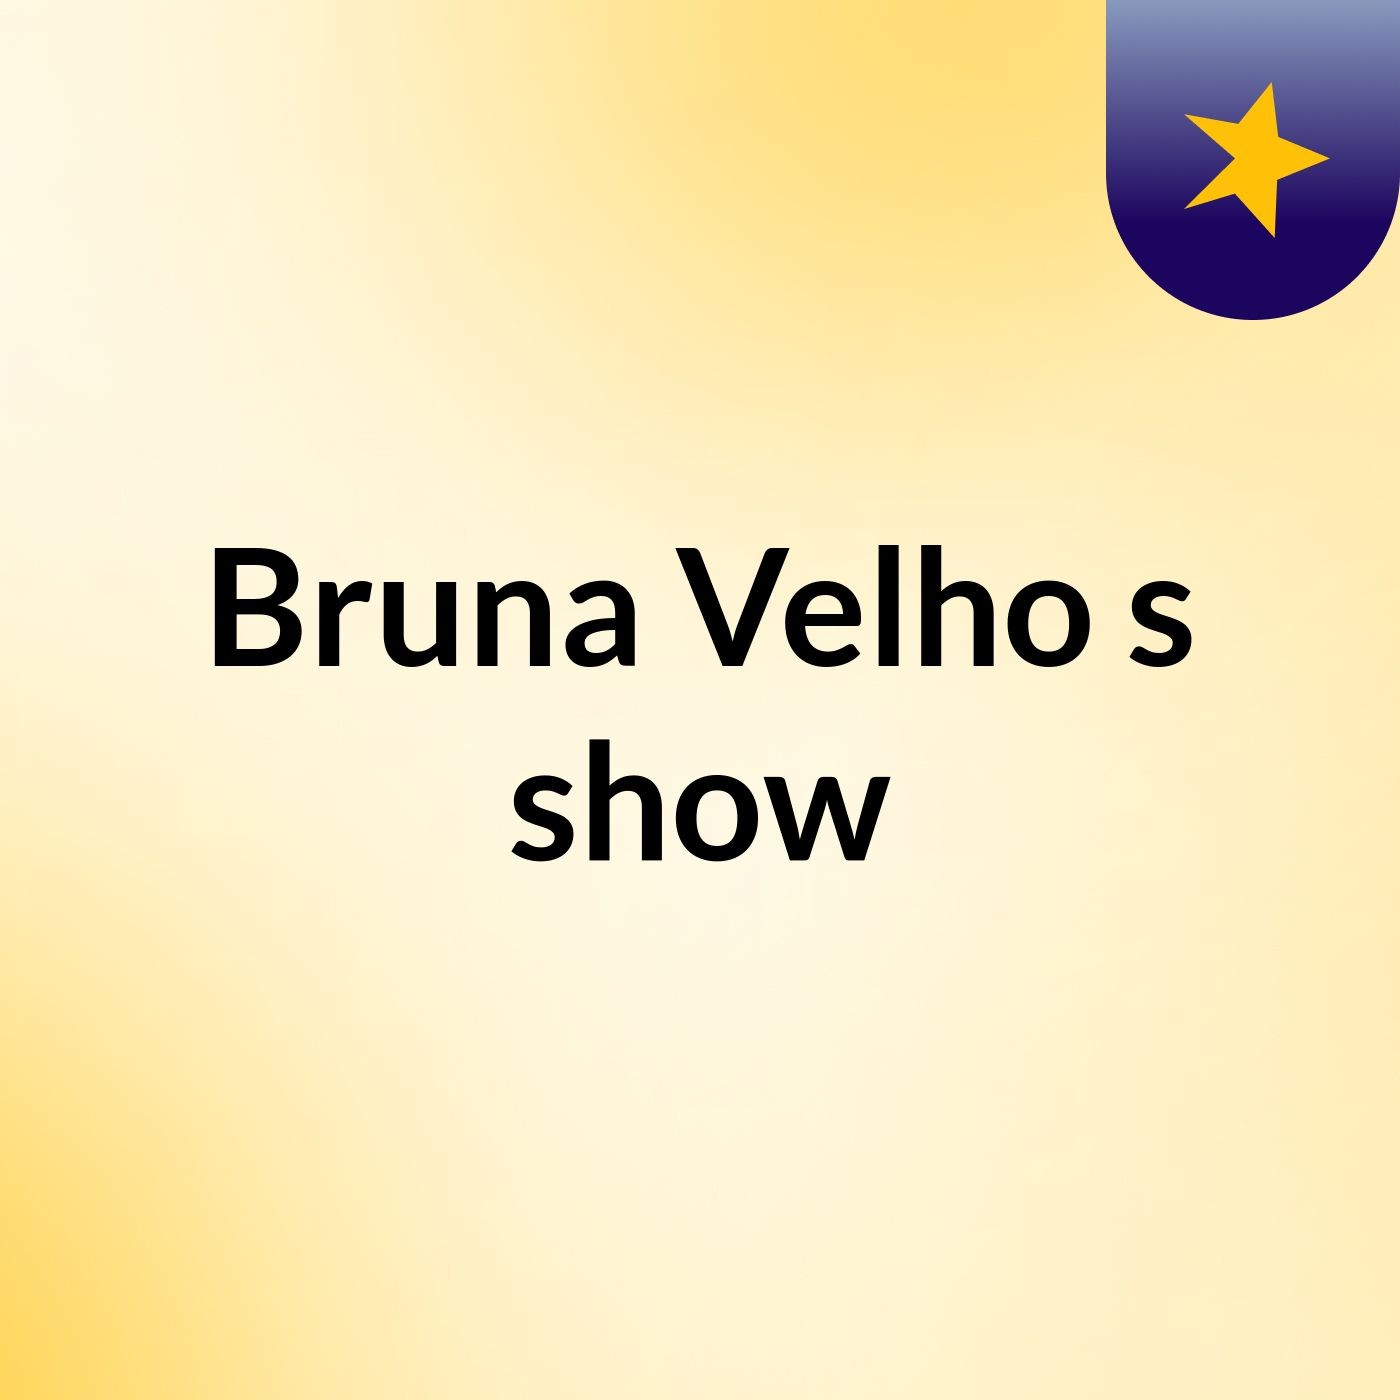 Bruna Velho's show